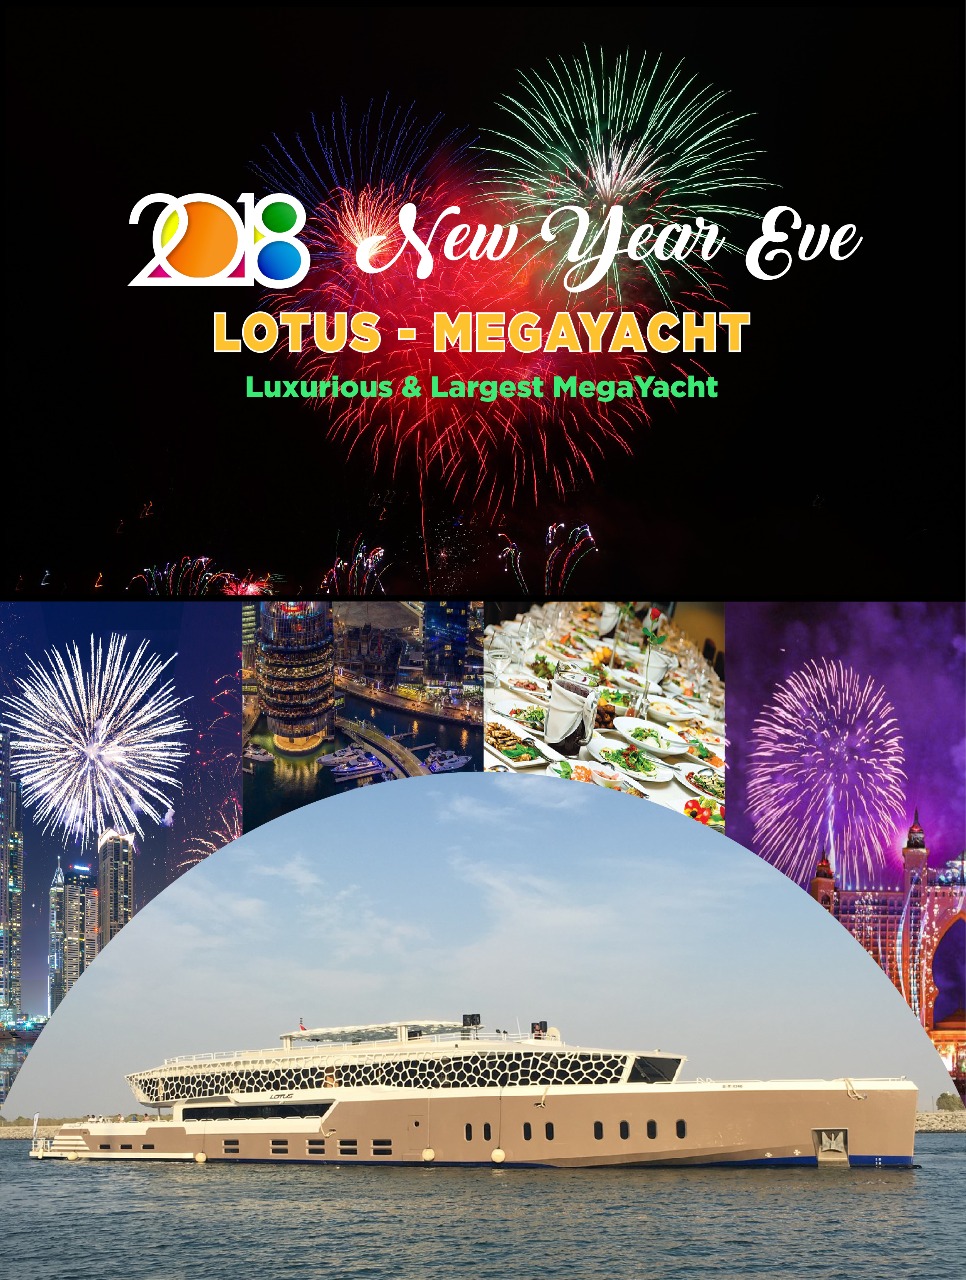 New Year Eve - Lotus - Megayacht